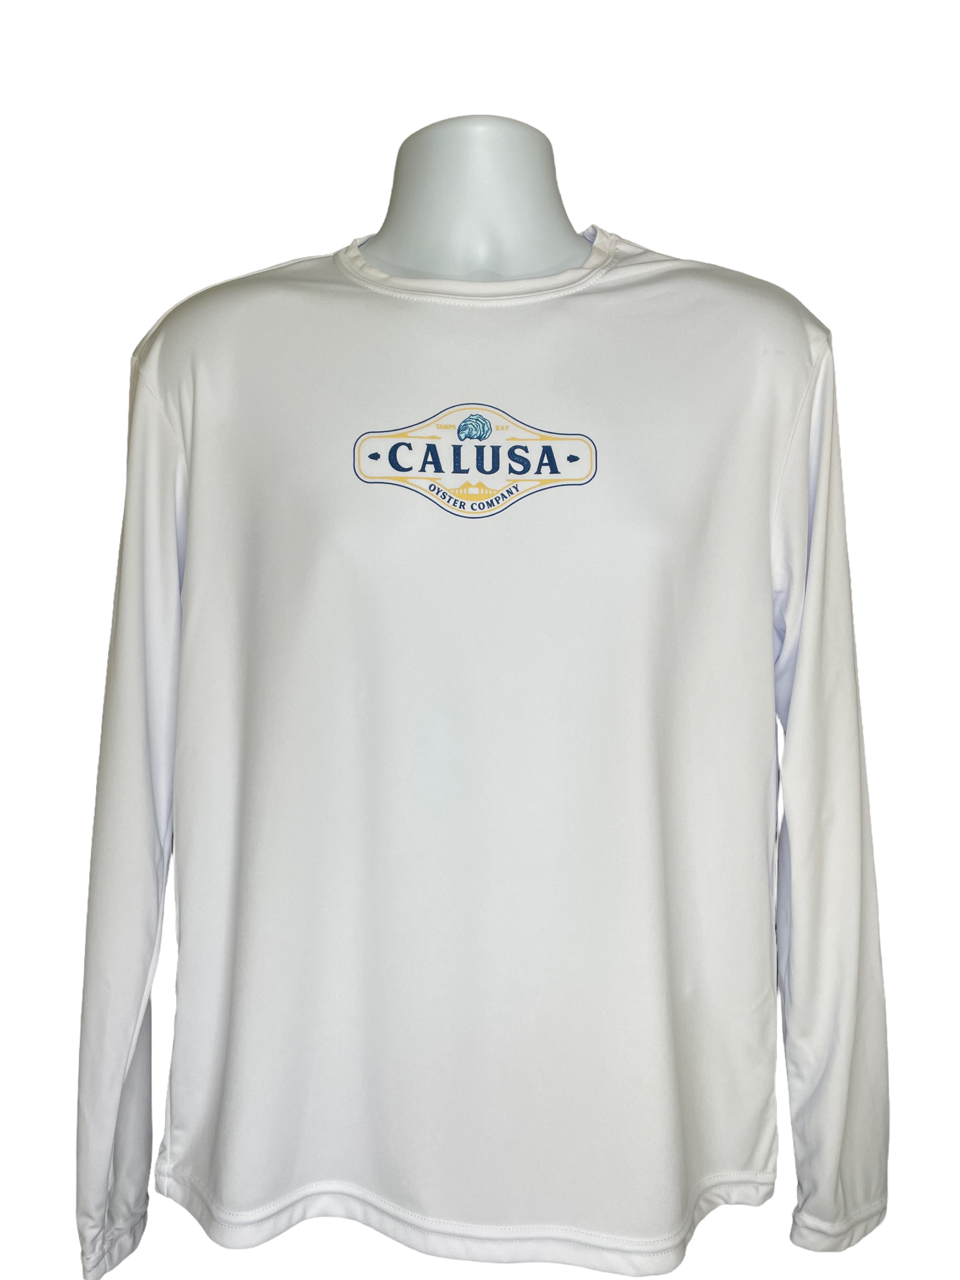 Calusa "Watermen's" Long Sleeve Shirt